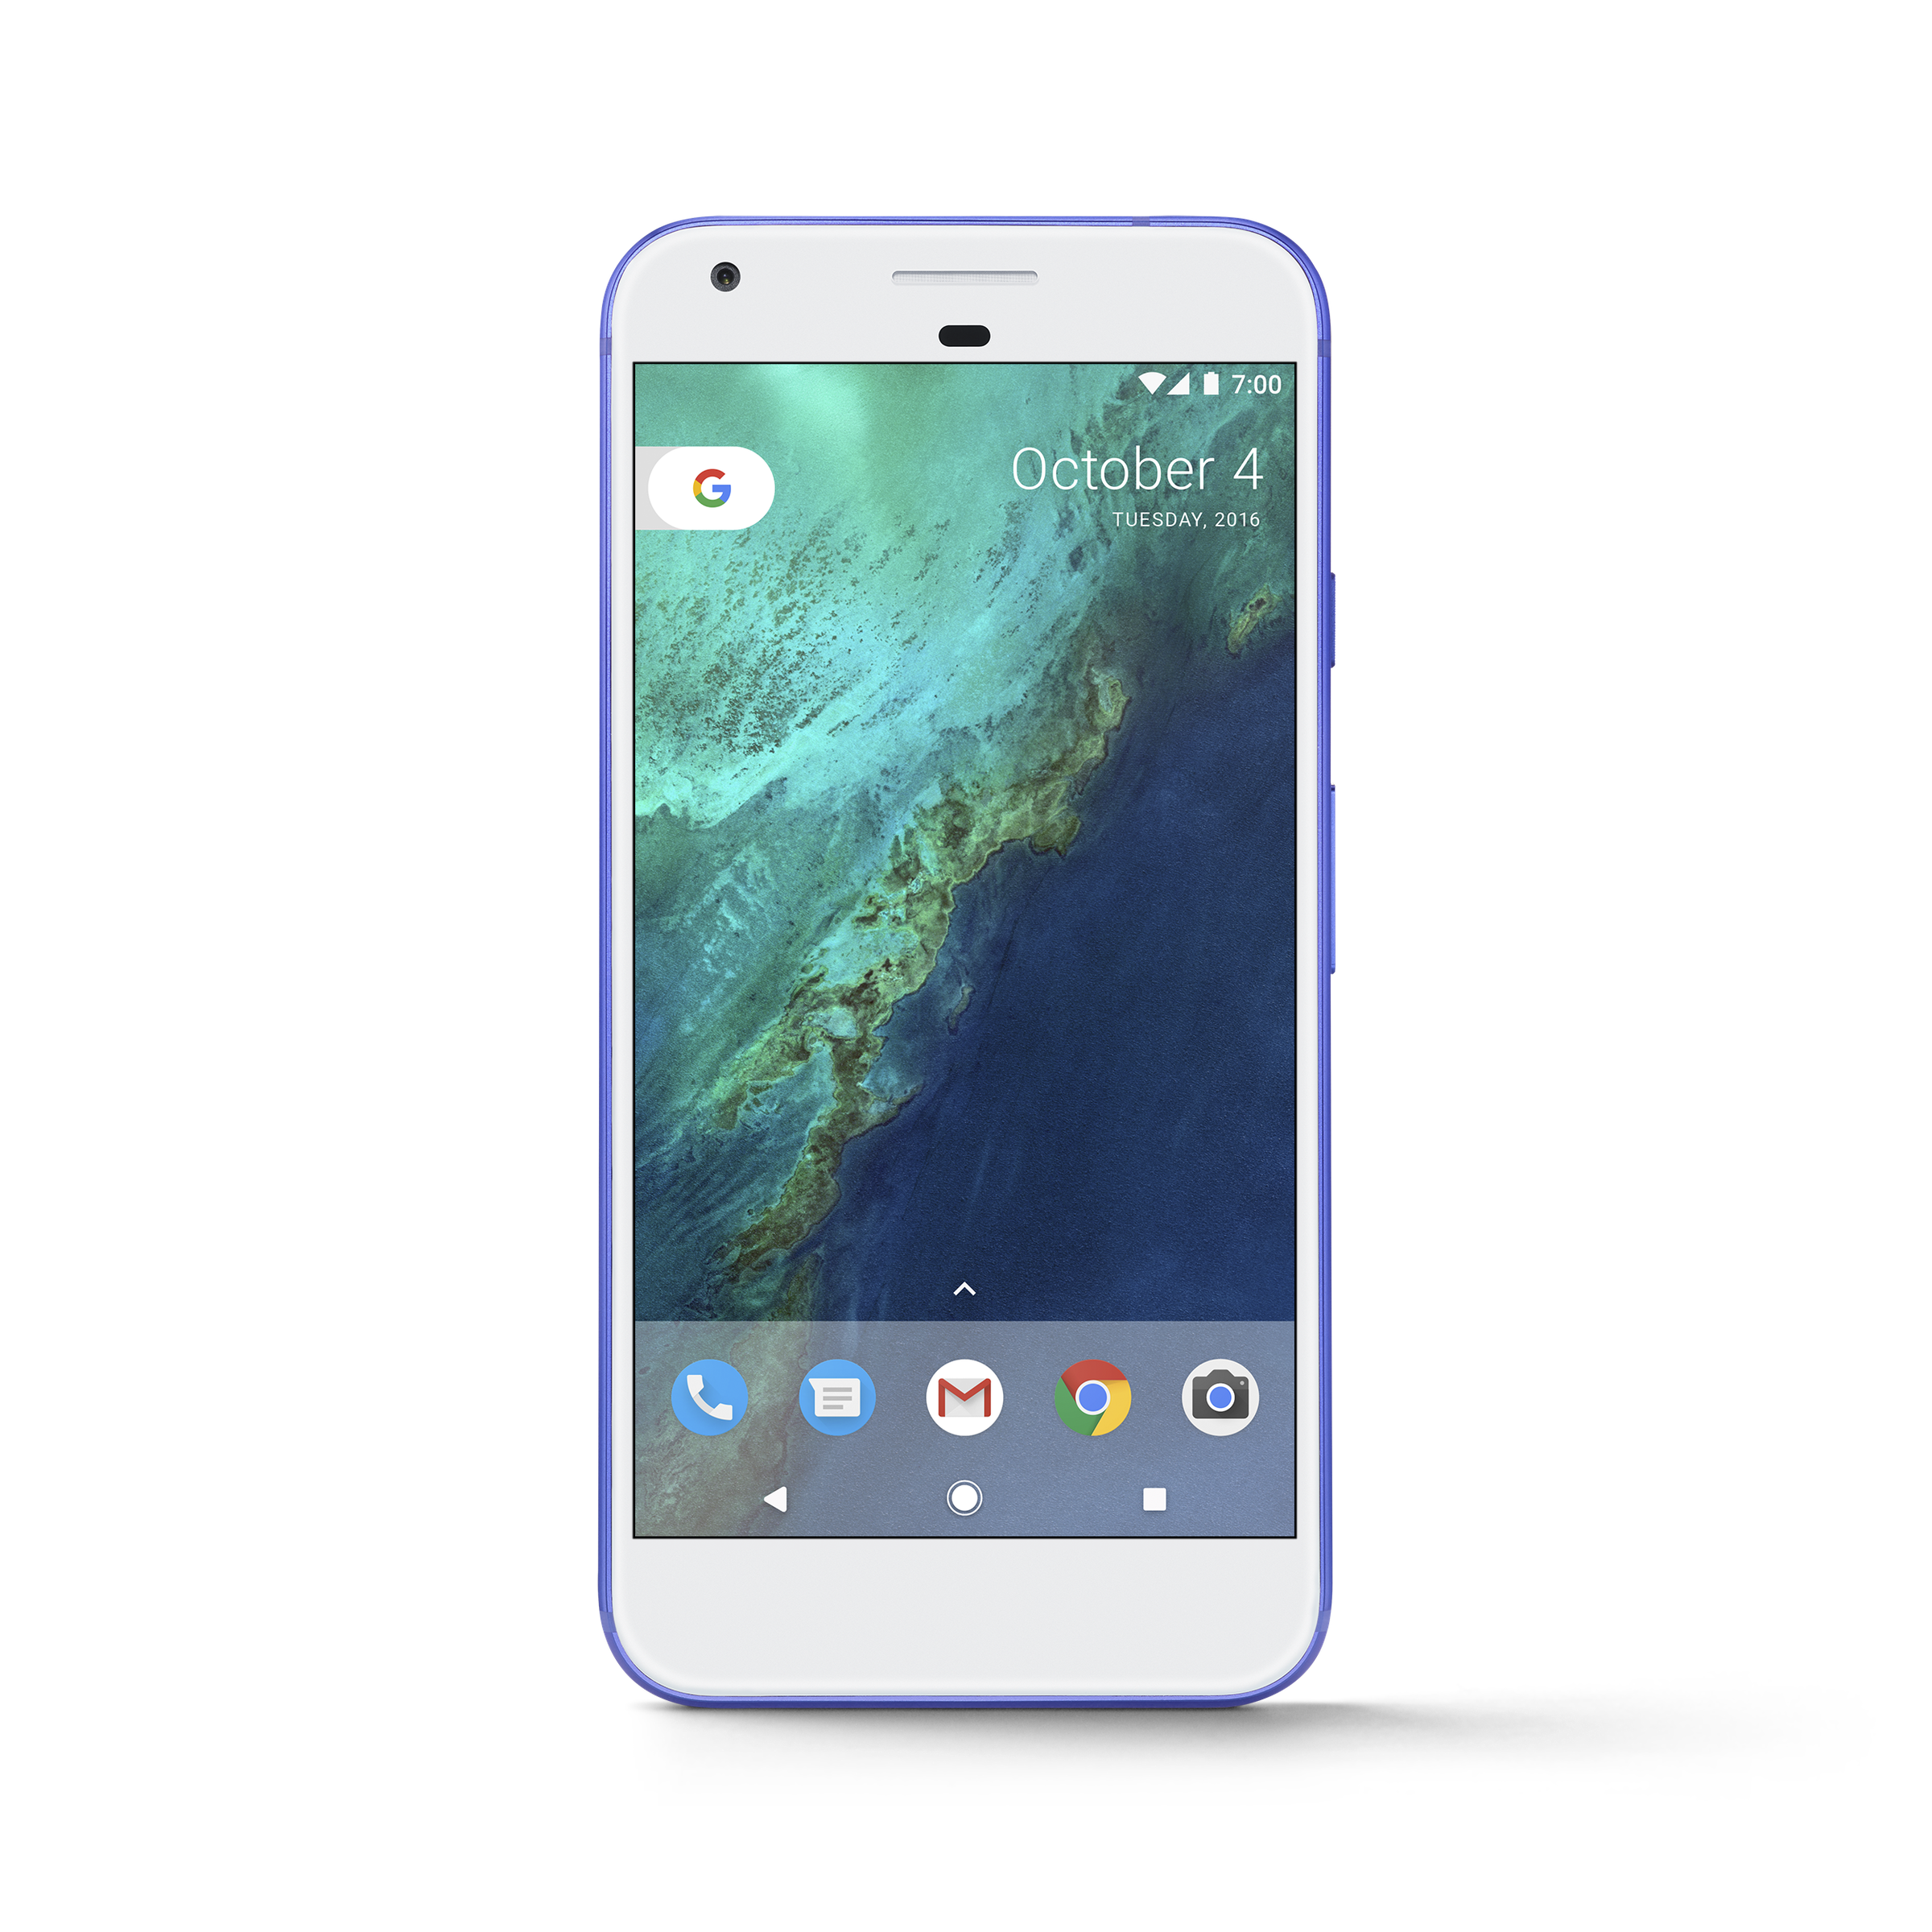 Google Pixel phone Announcement photos